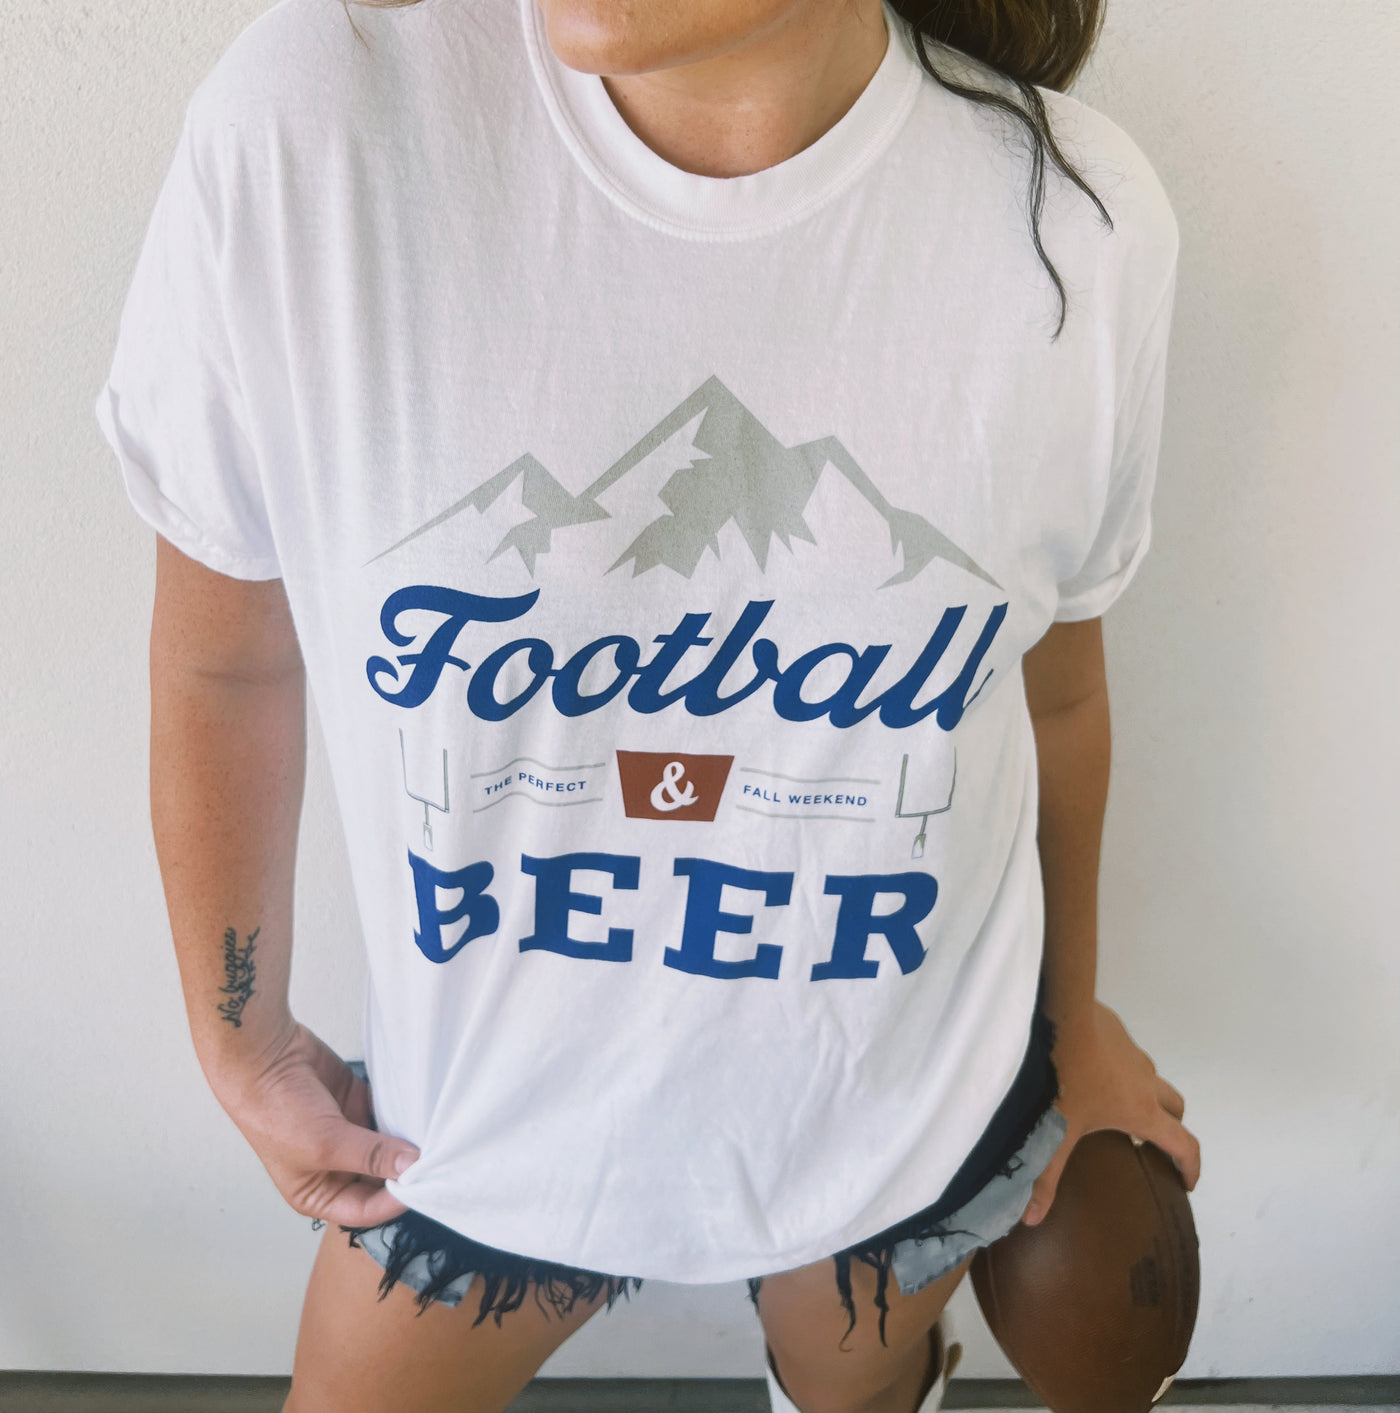 Football & Beer T-shirt